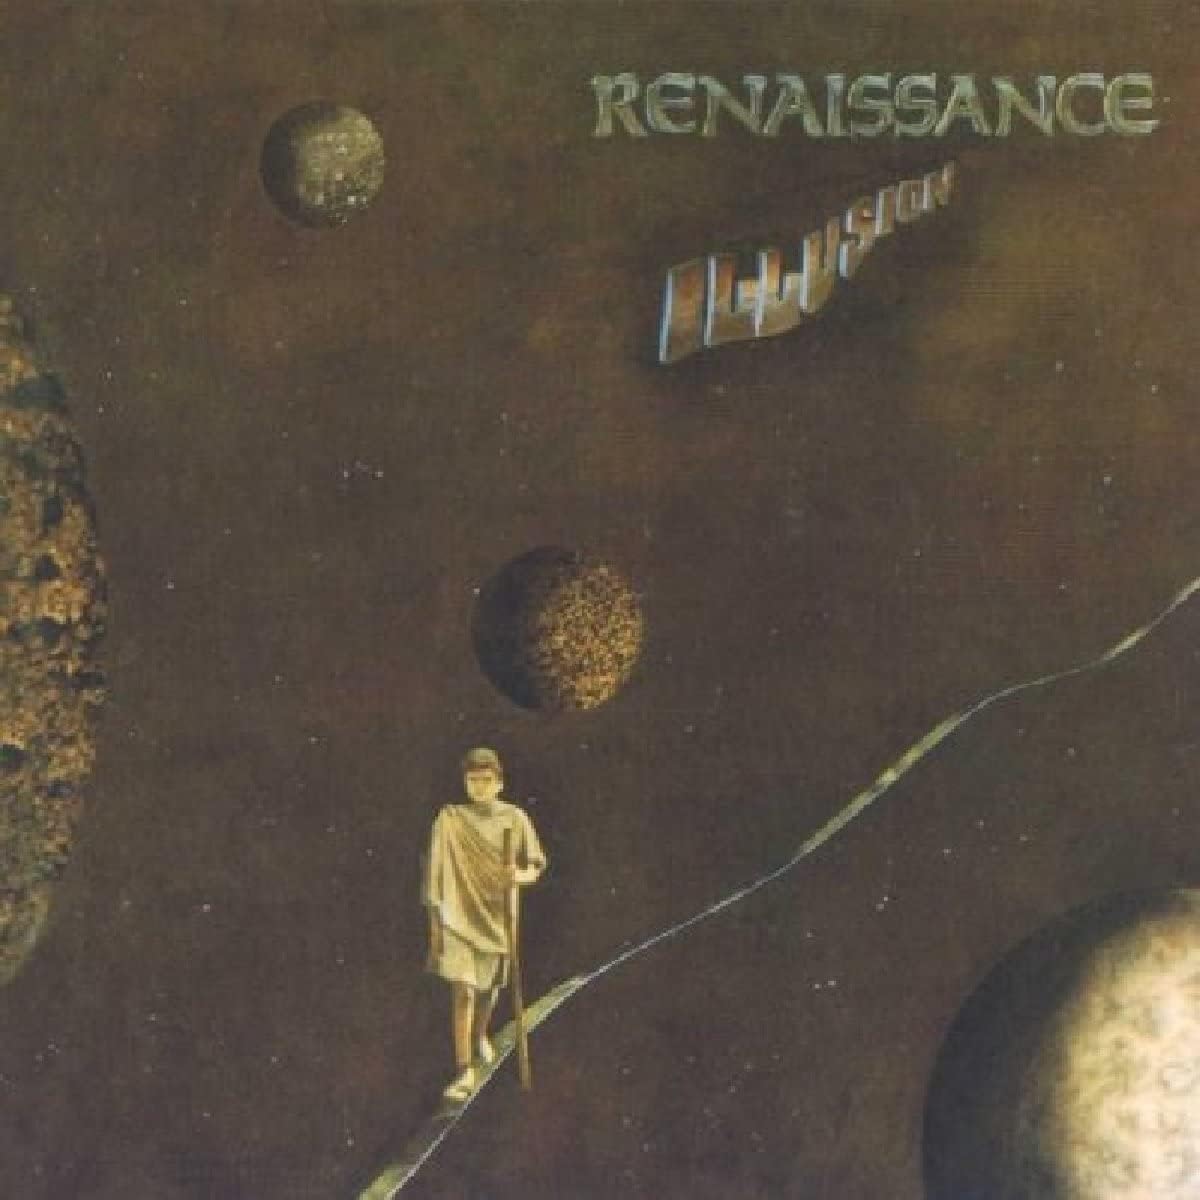 CD - Renaissance - Illusion